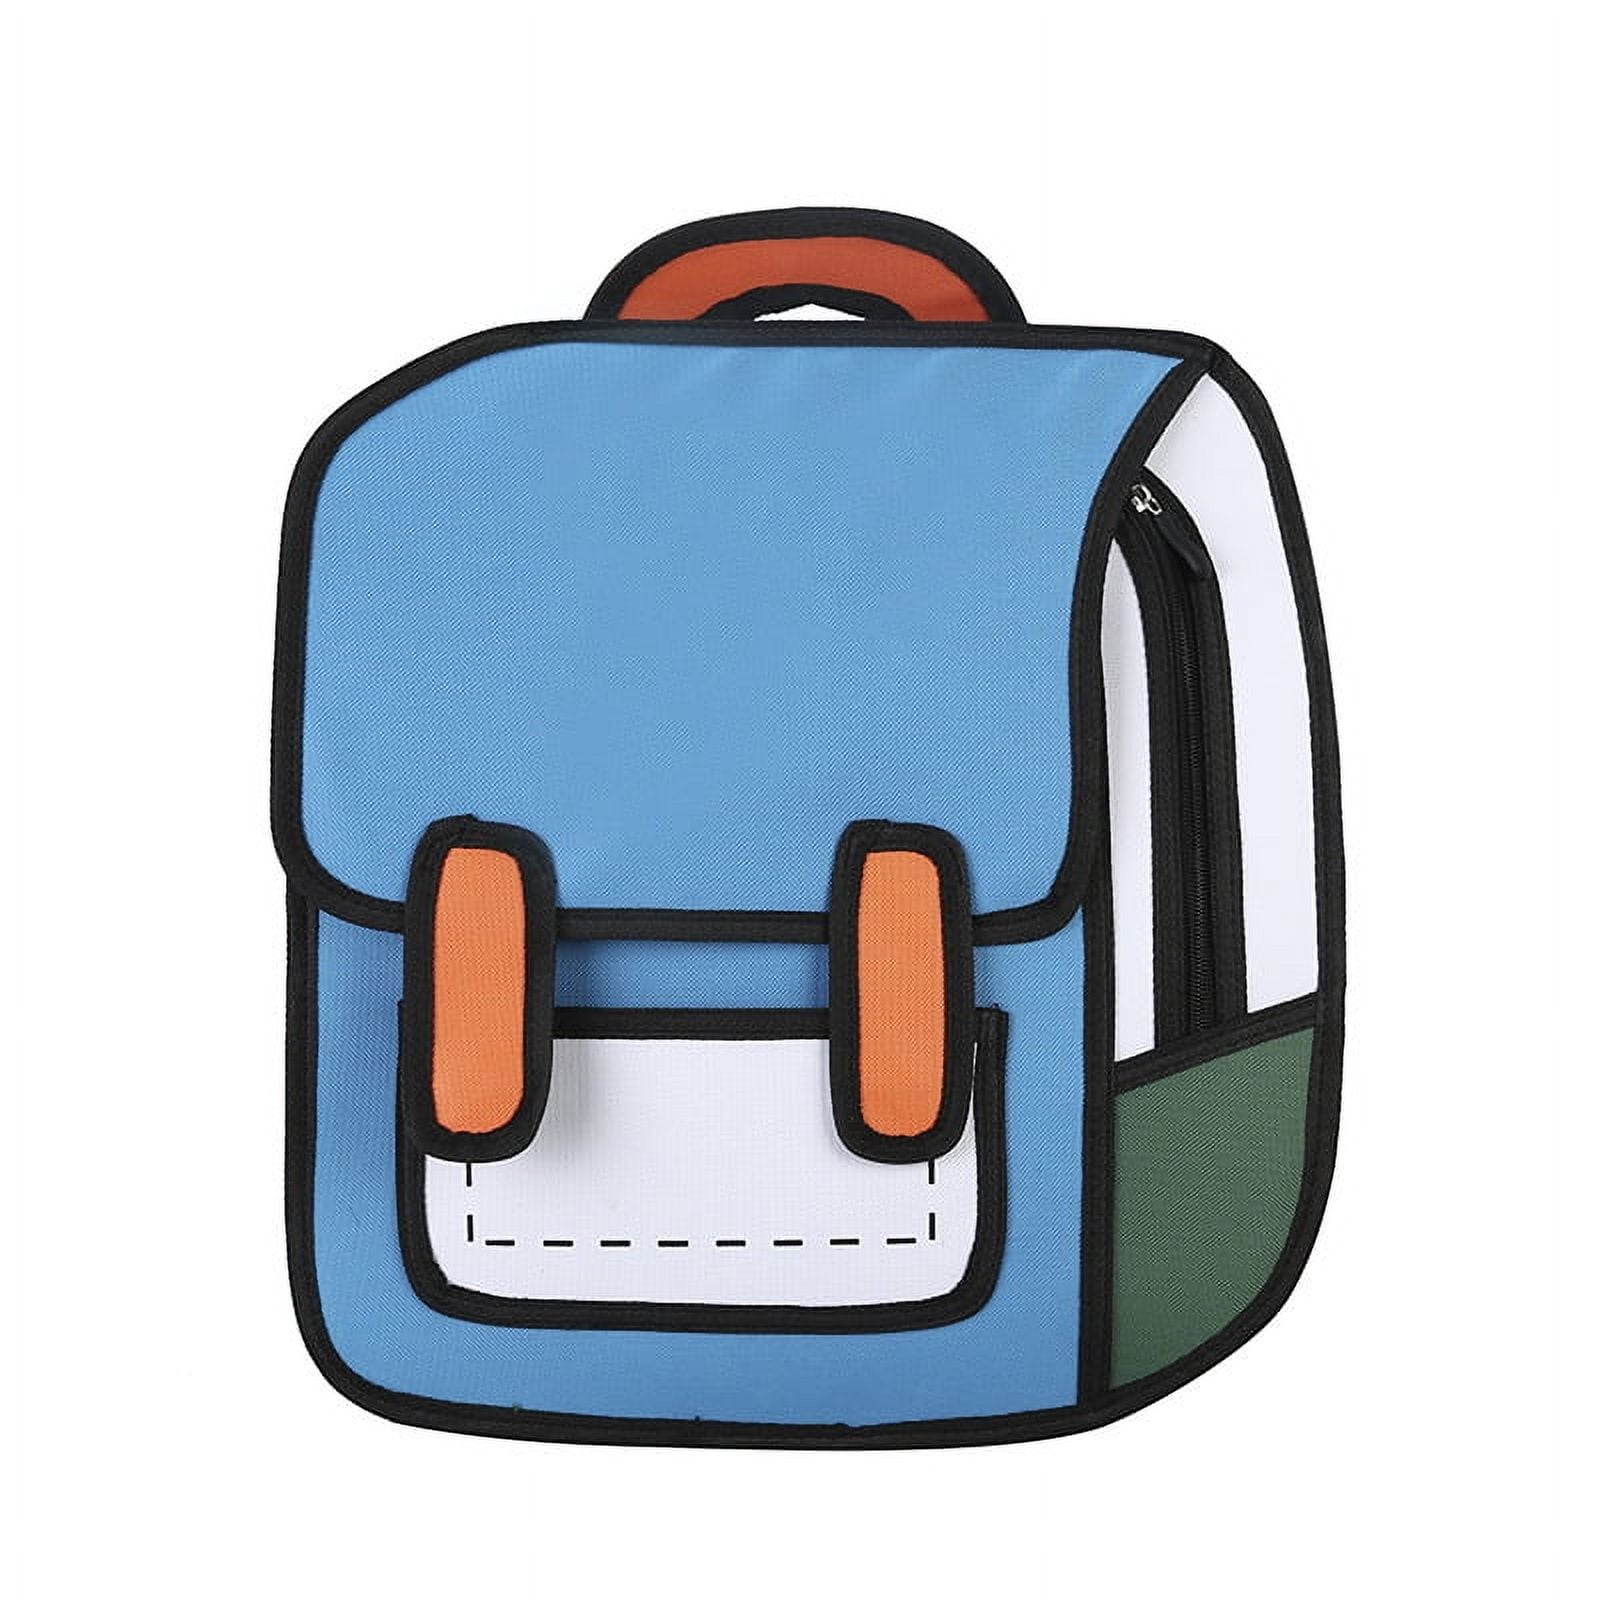 3D Backpack Jump Style 3D Jpg Drawing Backpack Cute Cartoon School Bag Comic Bookbag for Teenager Girls Boys Daypack Travel Rucksack Bag, Girl's, Size